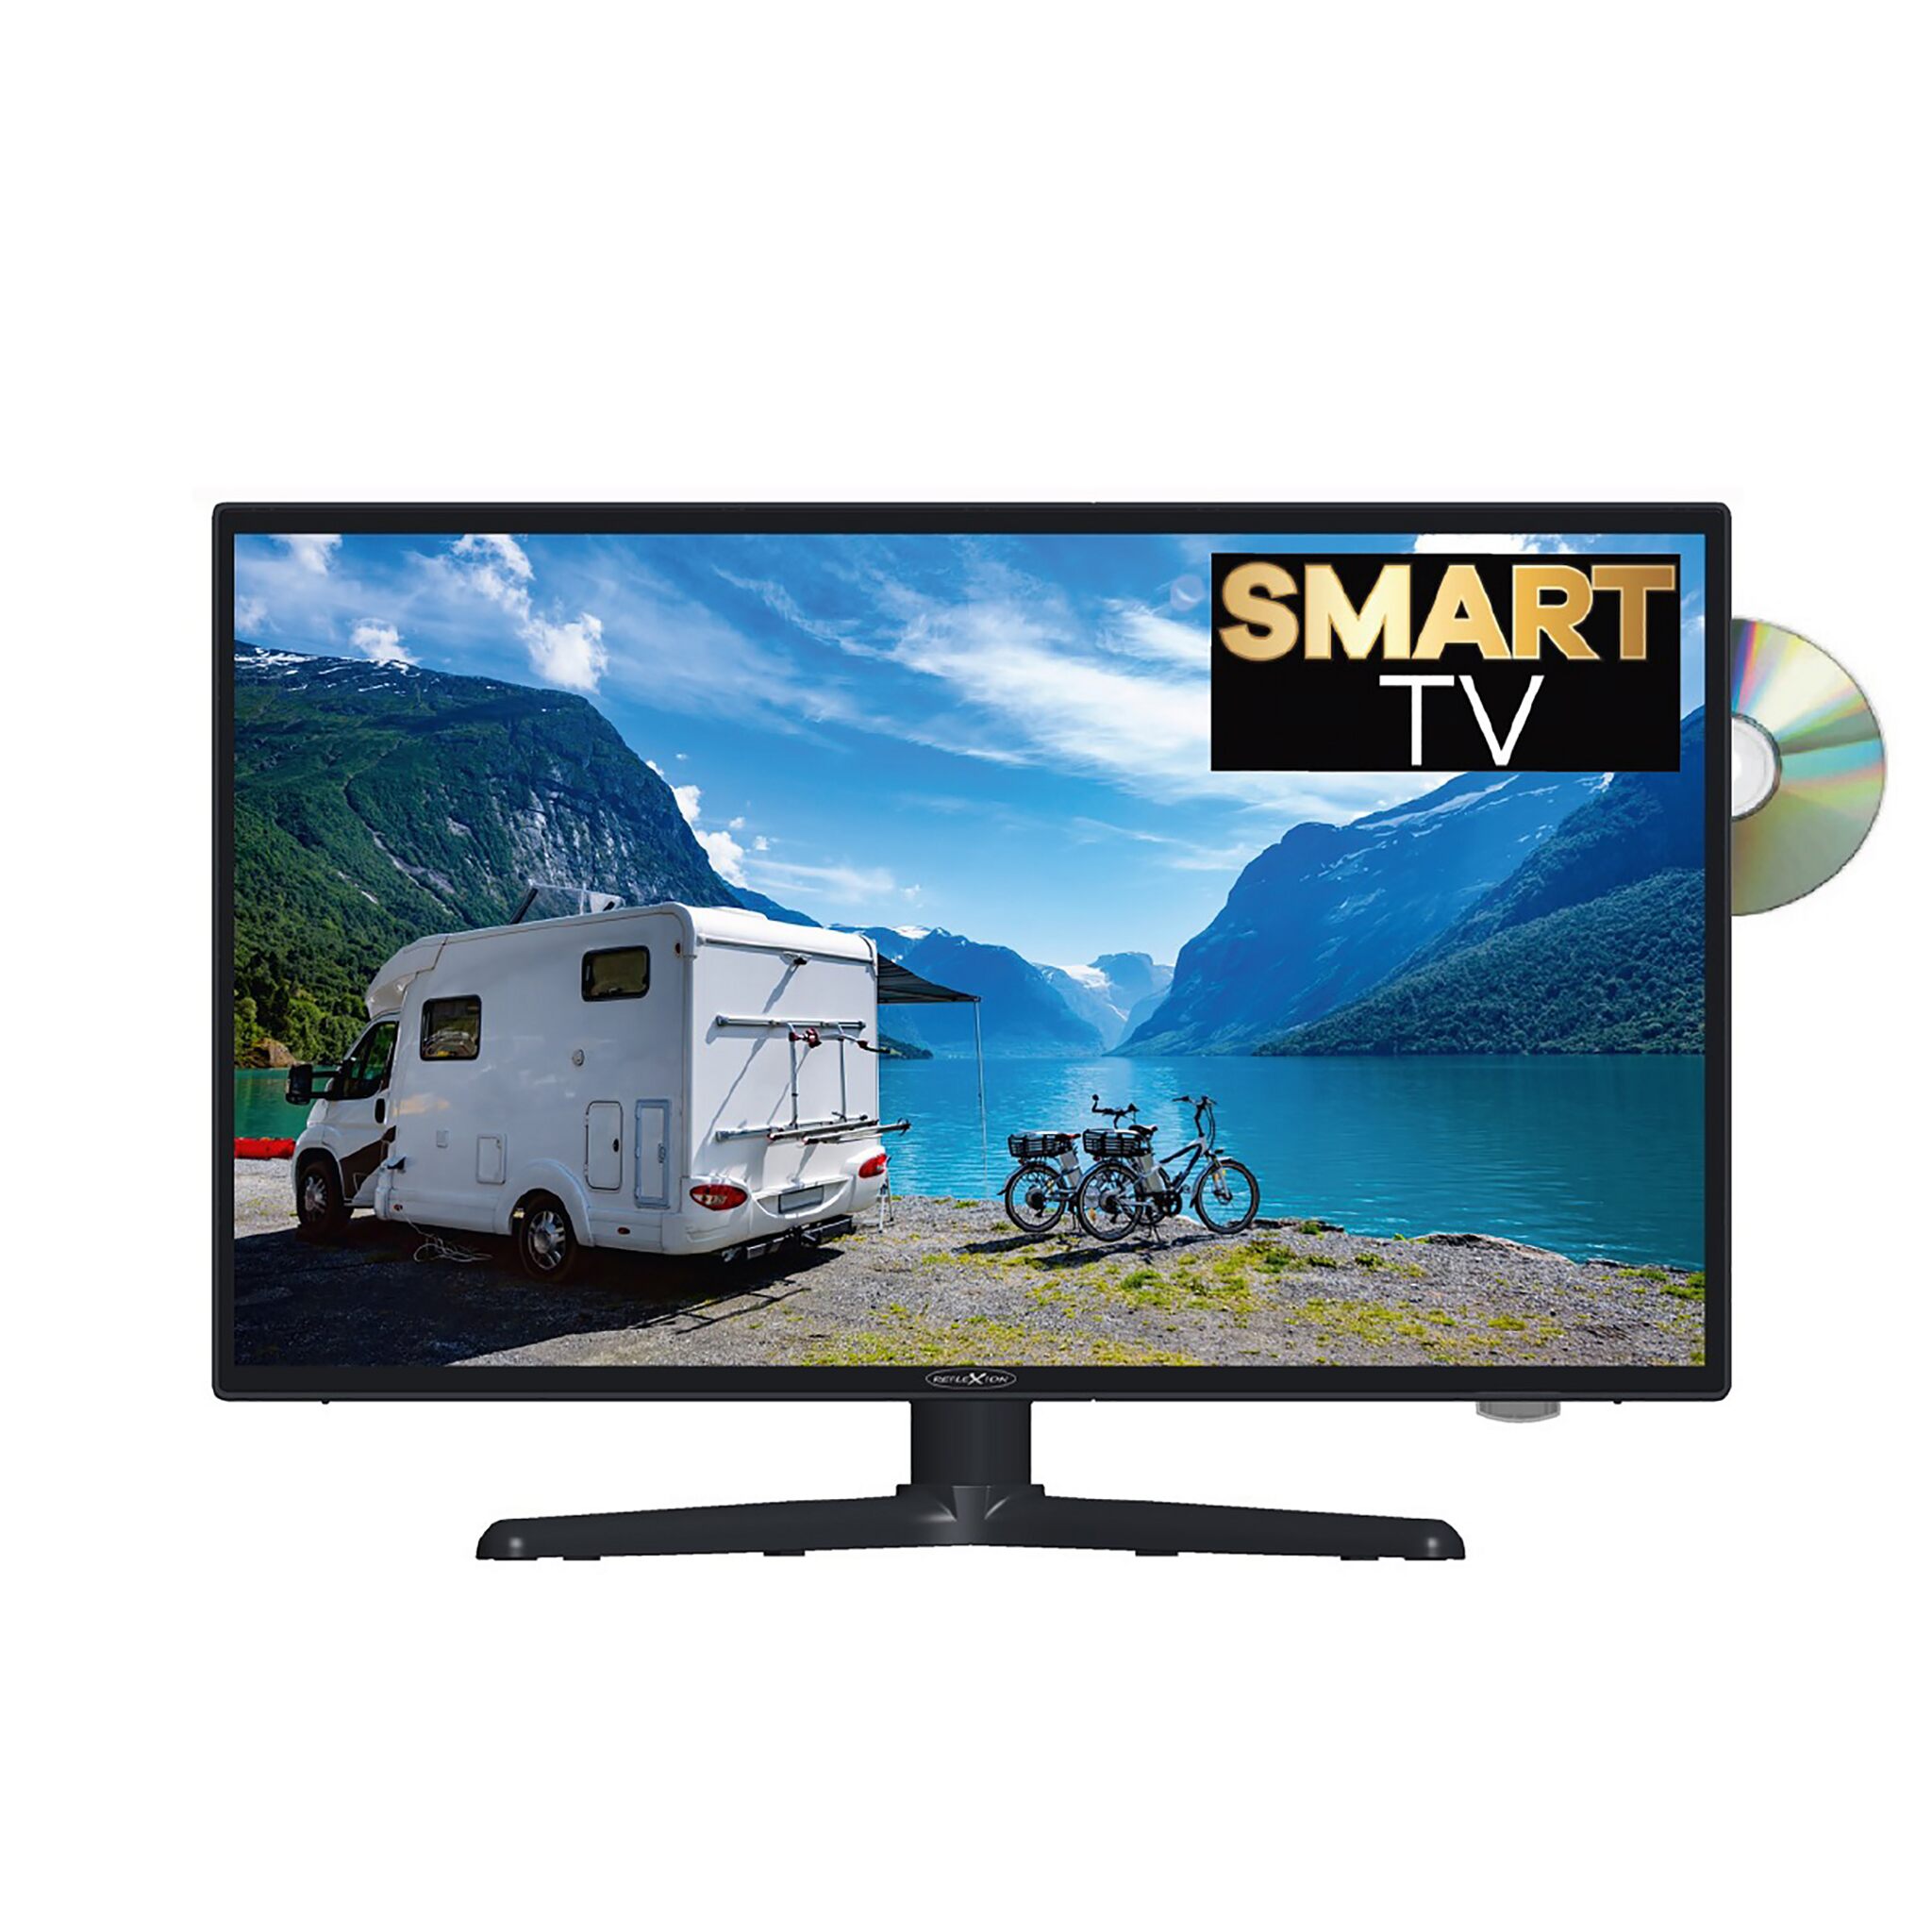 Reflexion 19" SMART LED-TV LDDW19i+ fürs Boot, Camping mit 12/24/240 V, WLAN, DVD